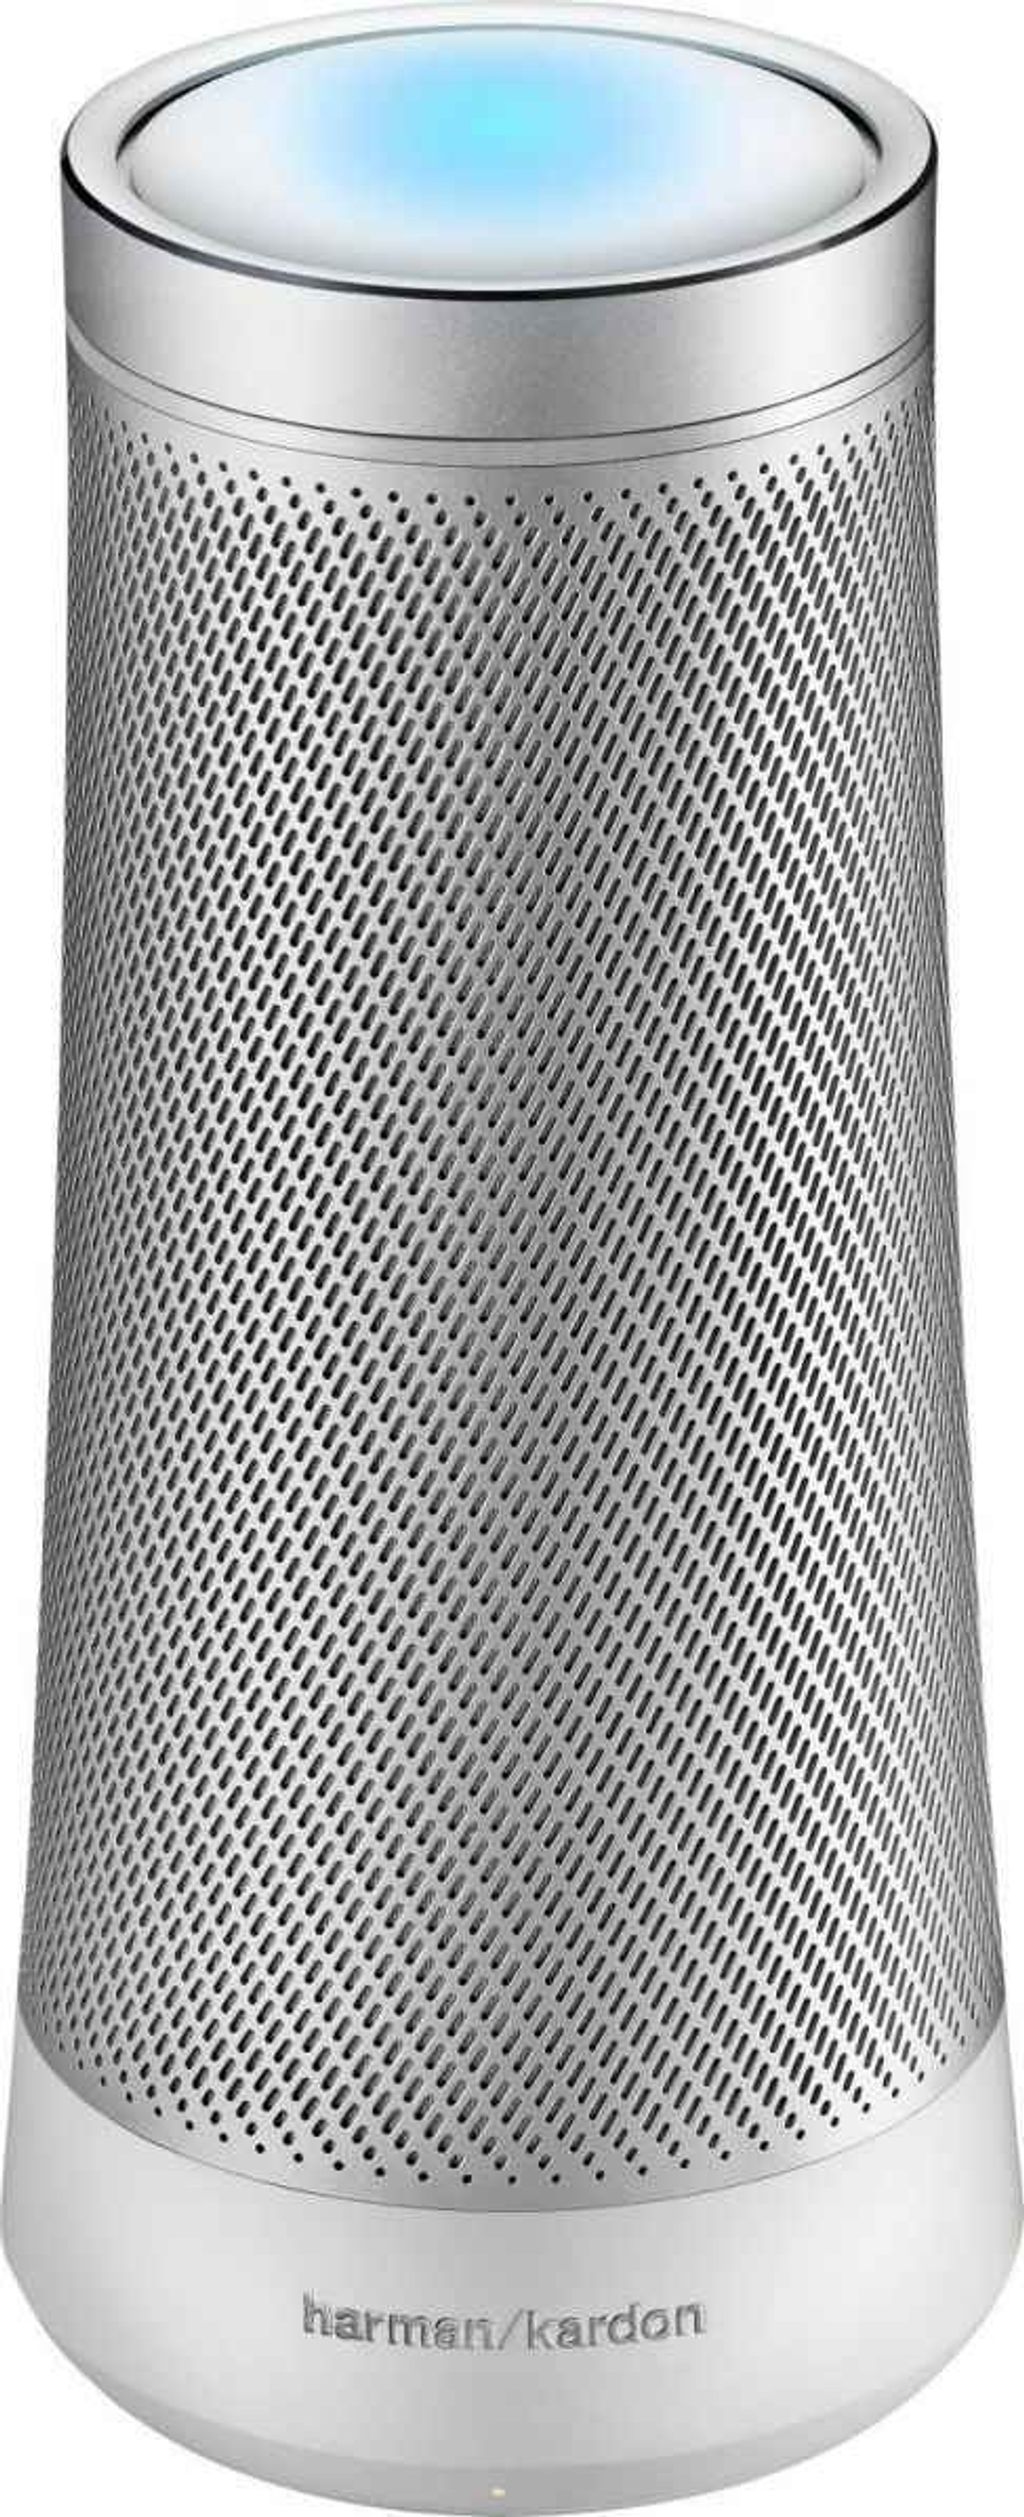 Harman Kardon Next Generation Smart Speaker techX.jpg